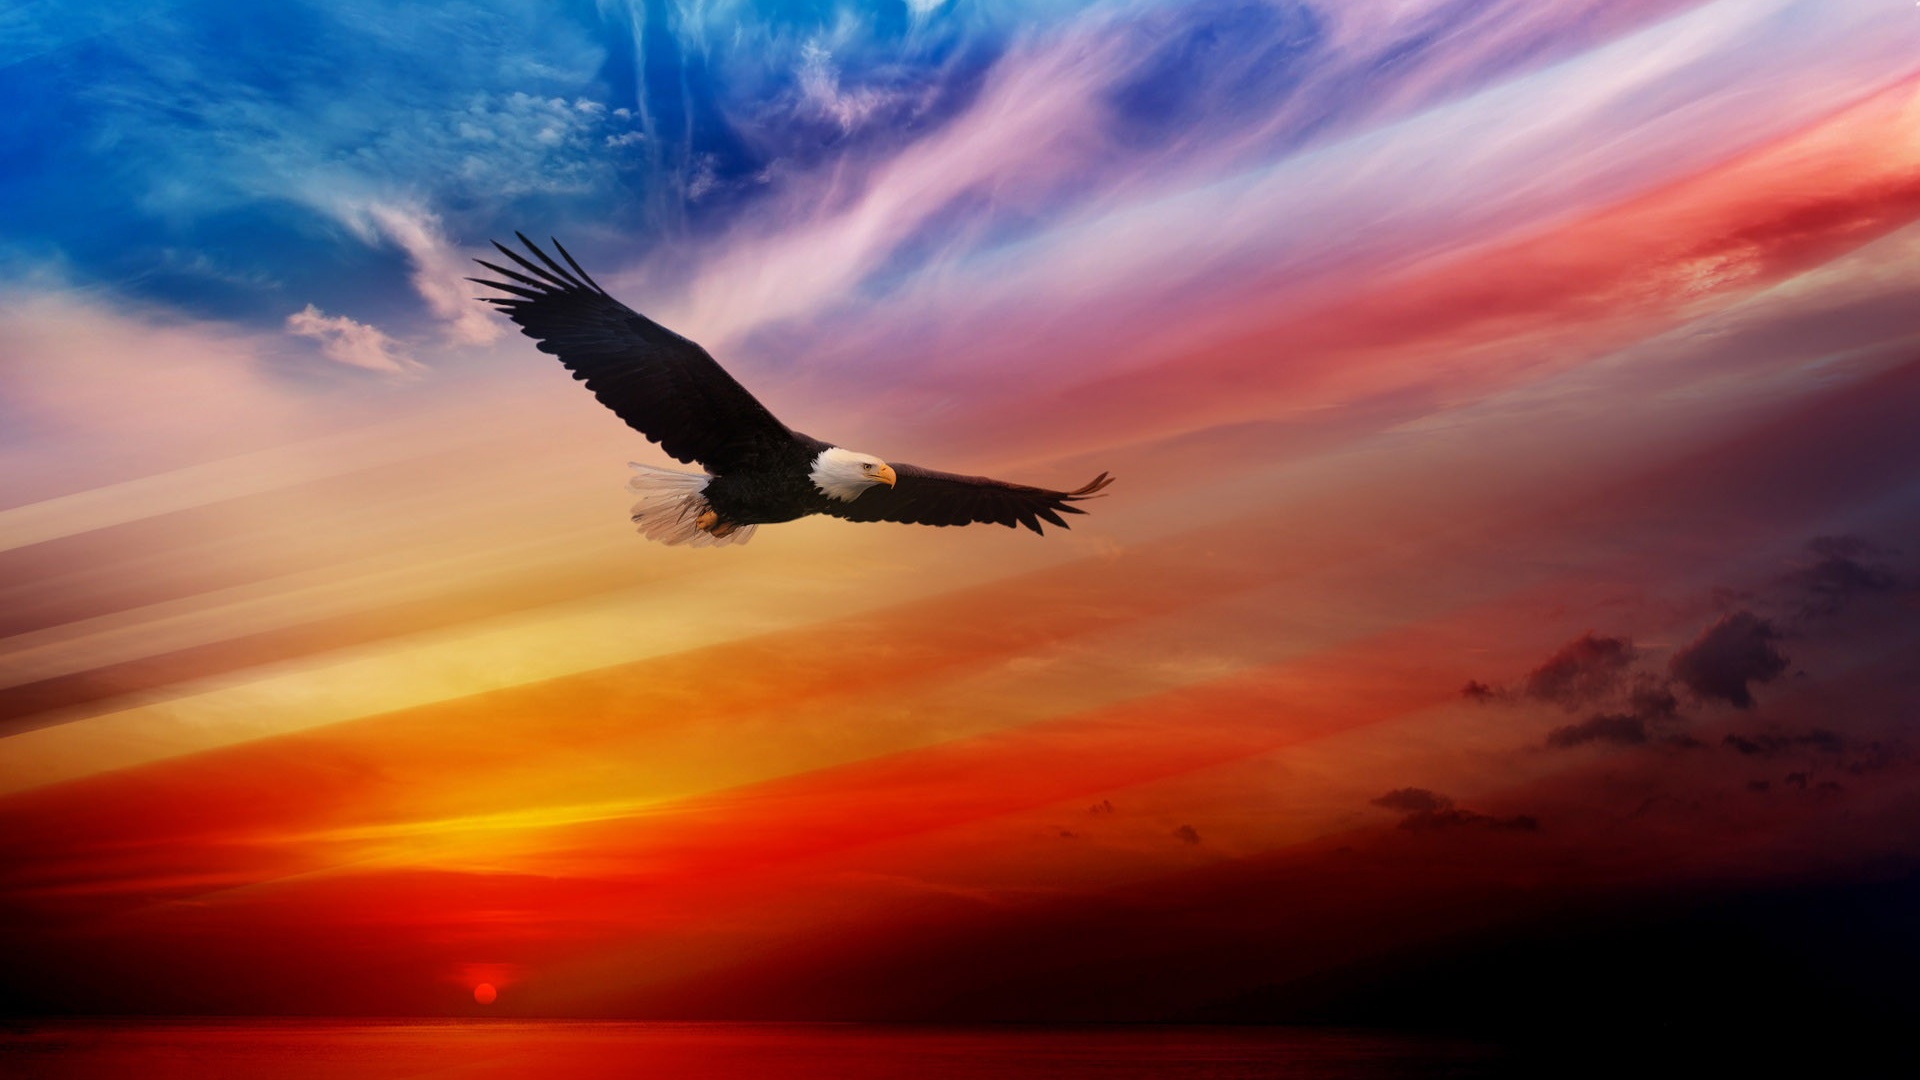 Fourth Of July 2014 USA Eagle